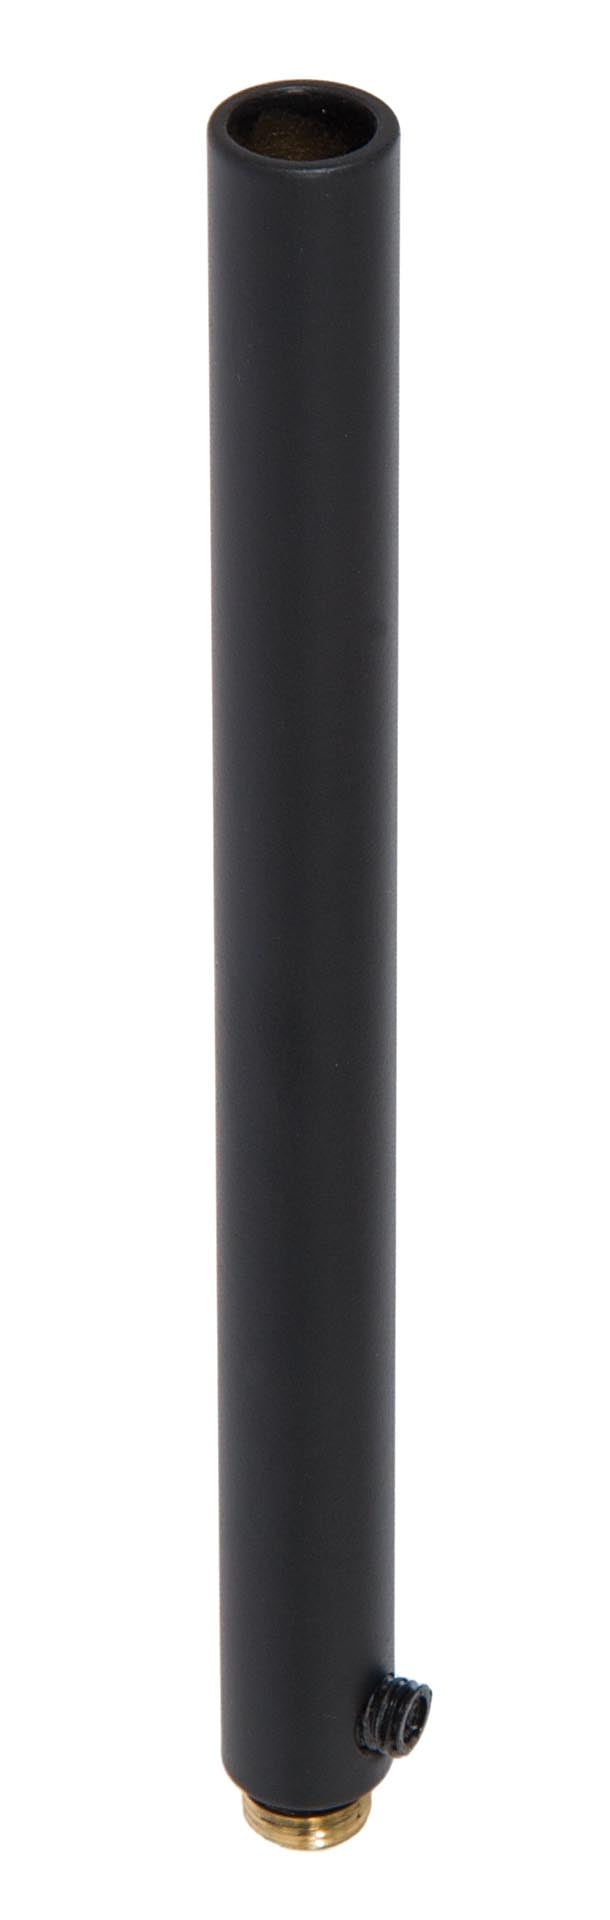 6 Inch Tall Satin Black Finish Brass Hollow Transition Cord Grip Bushing w/ Polycarbonite Set Screw, 1/8M